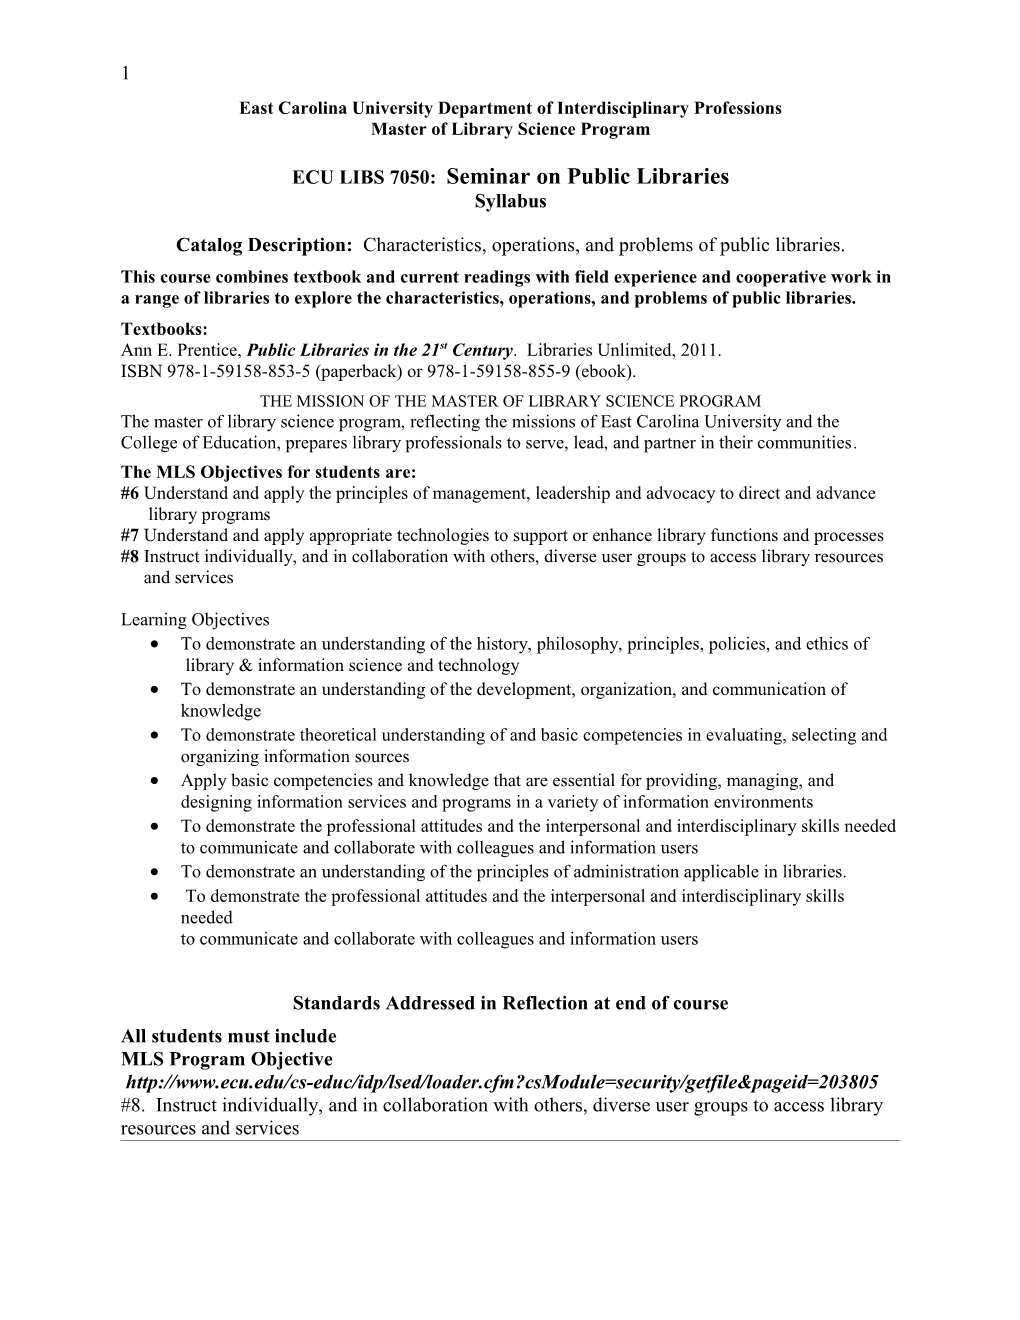 ECU LIBS 7050: Seminar on Public Libraries